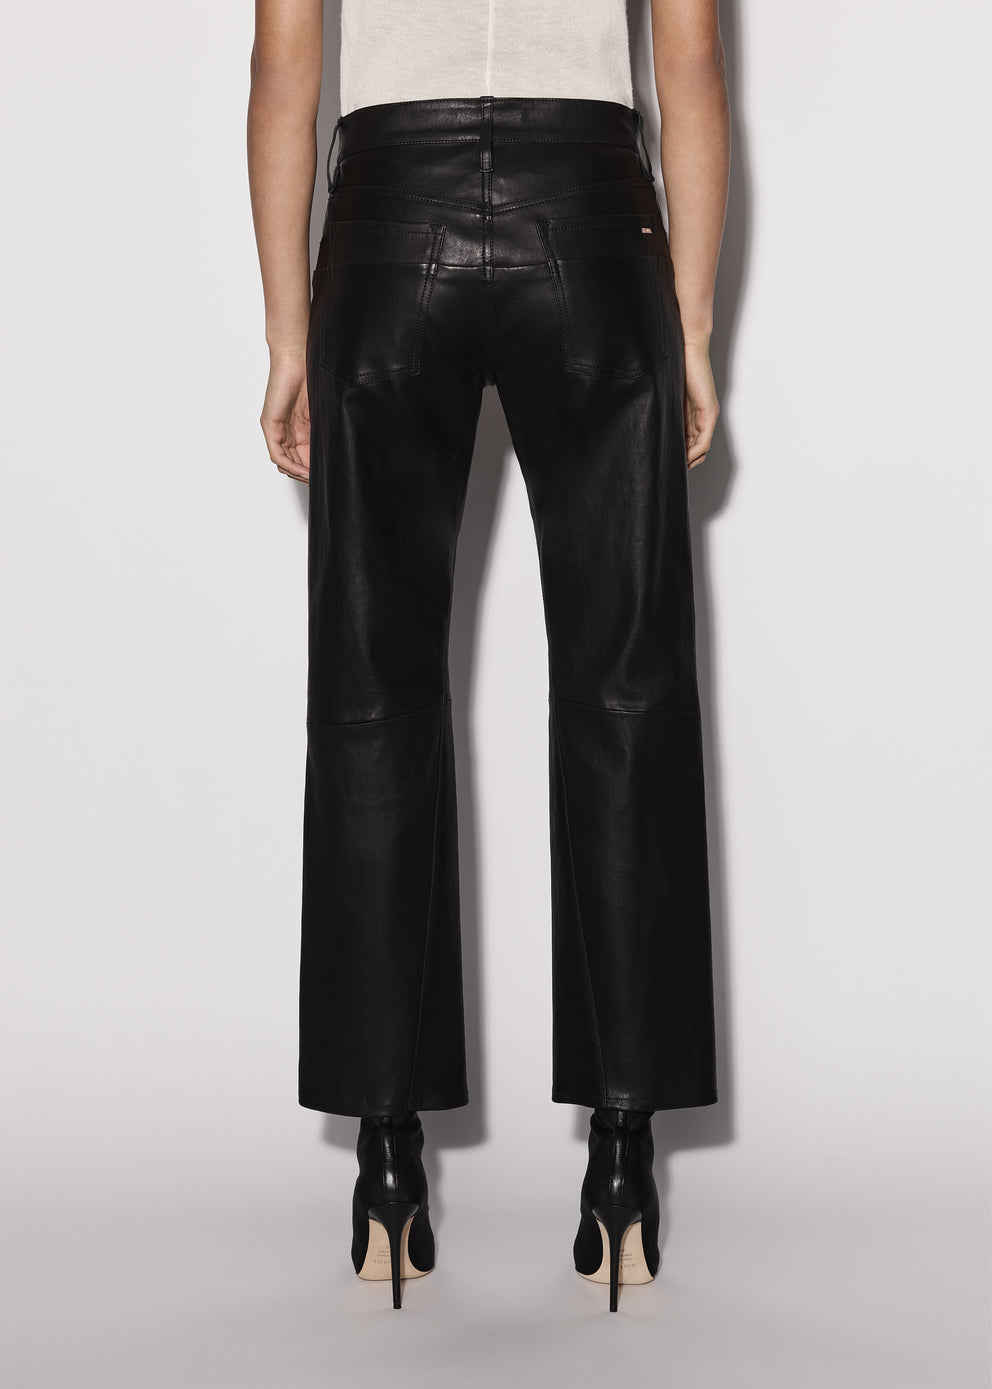 Leather Amiri Cuero 5 Pocket Directo Pant Mujer Negras | 2649XGSEU